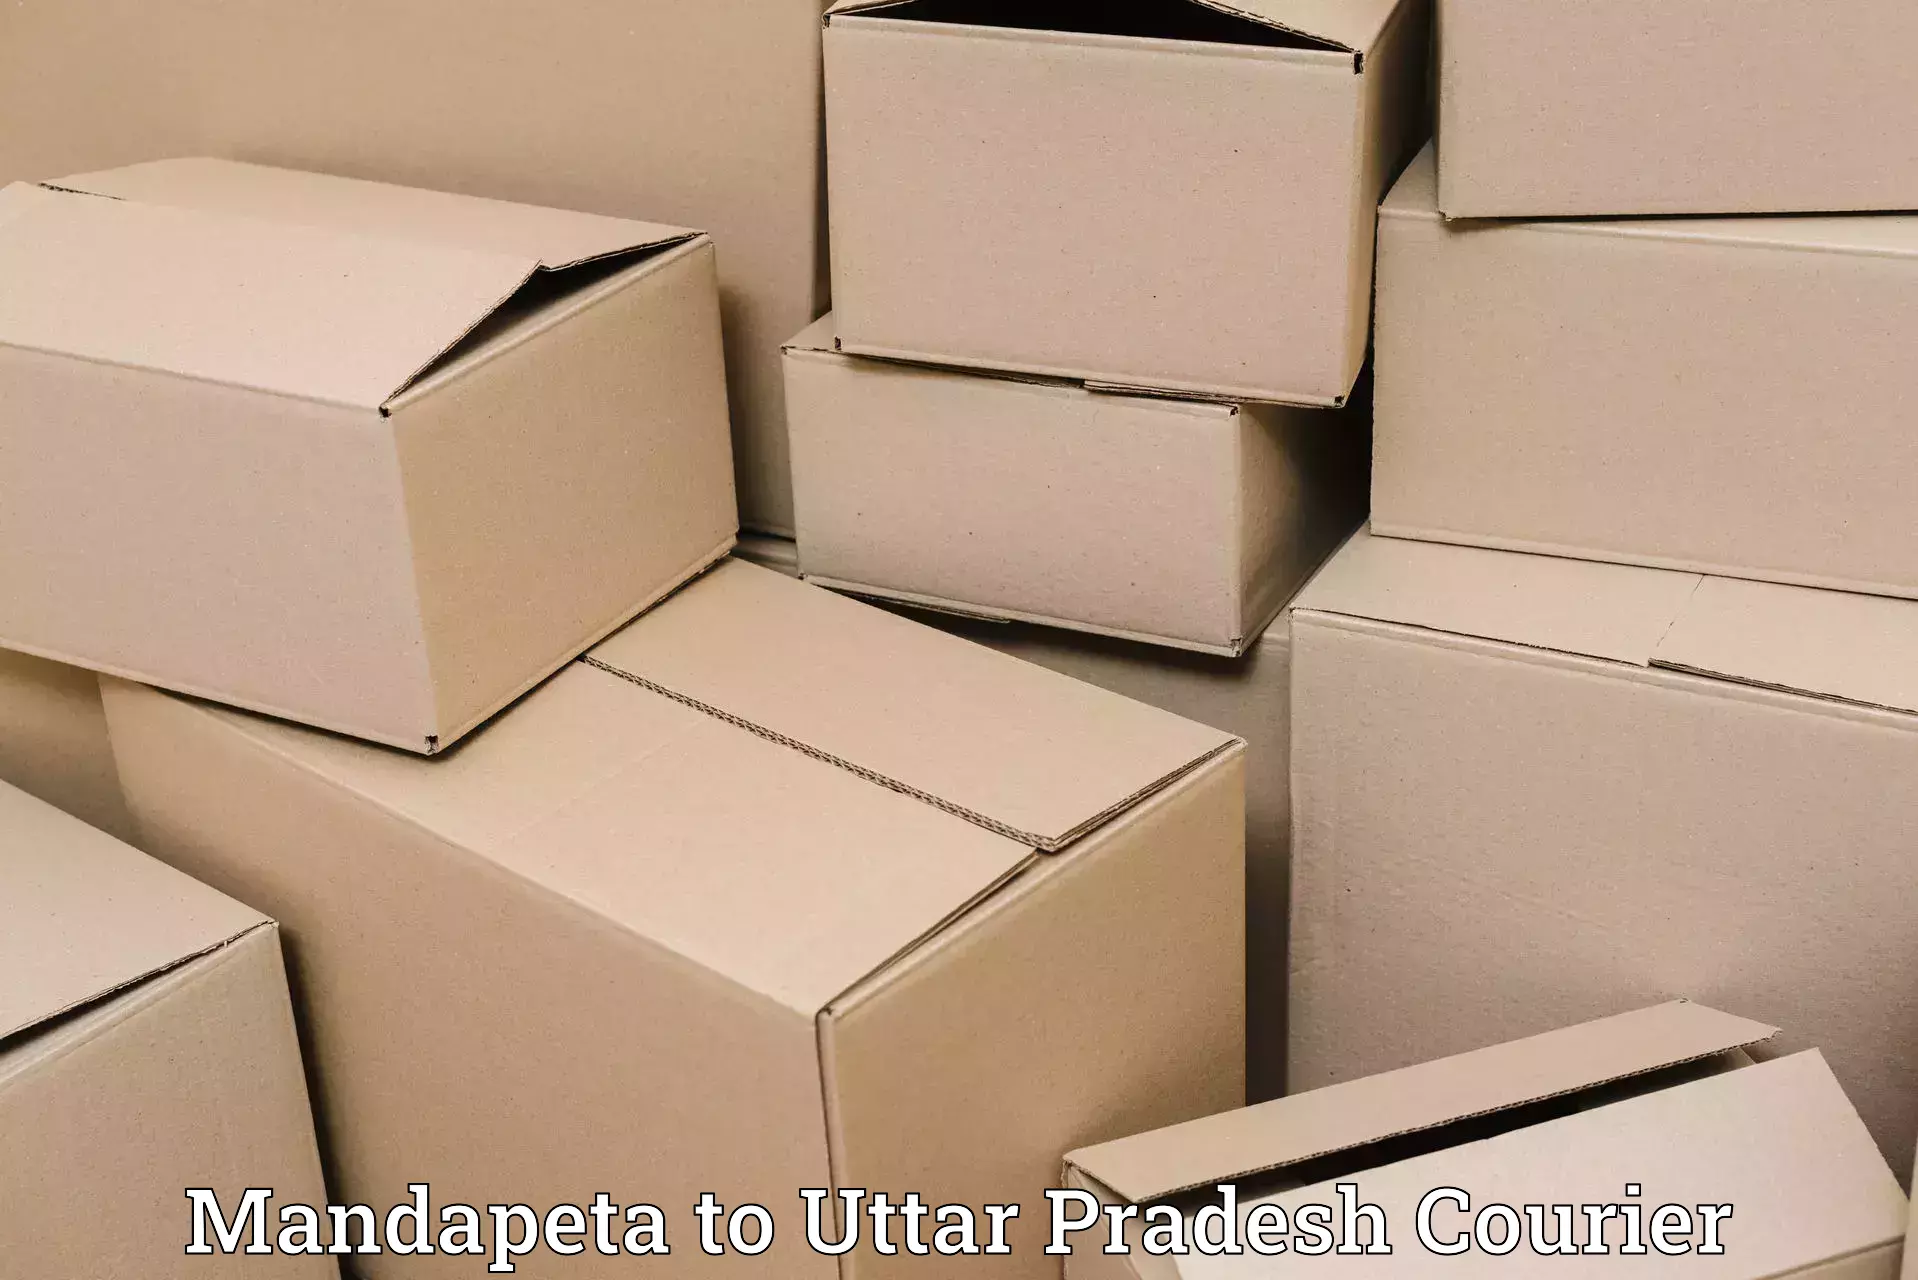 Professional courier handling Mandapeta to Aligarh